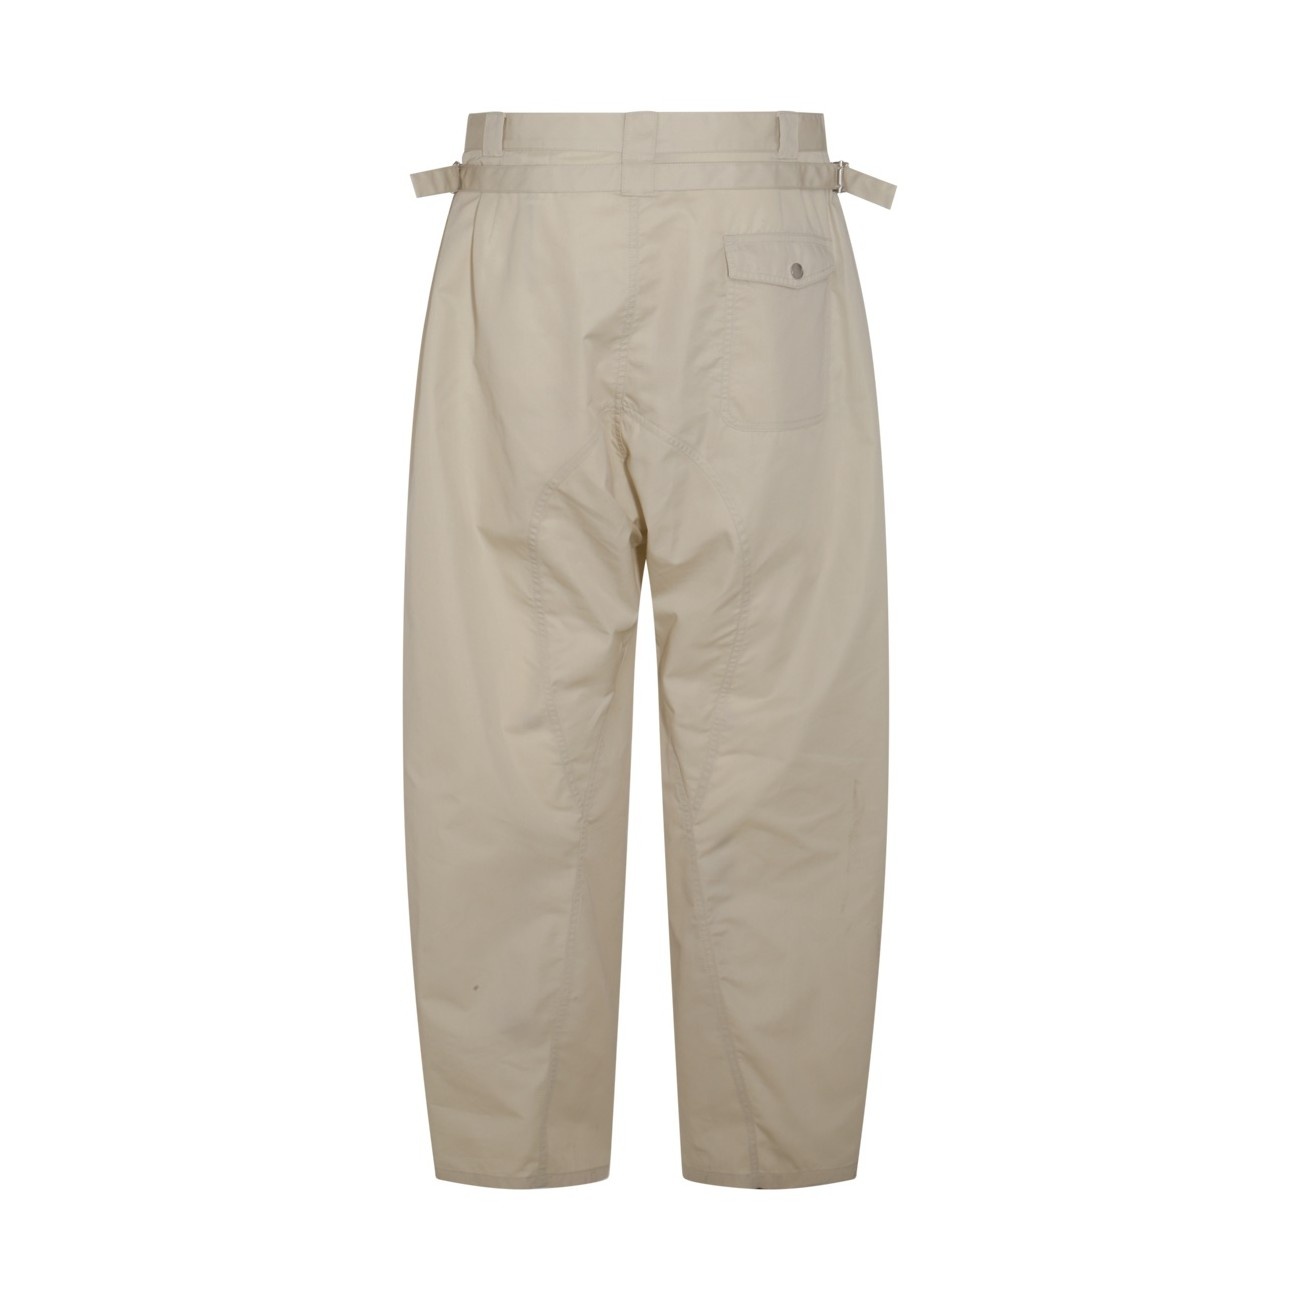 light grey cotton pants - 2